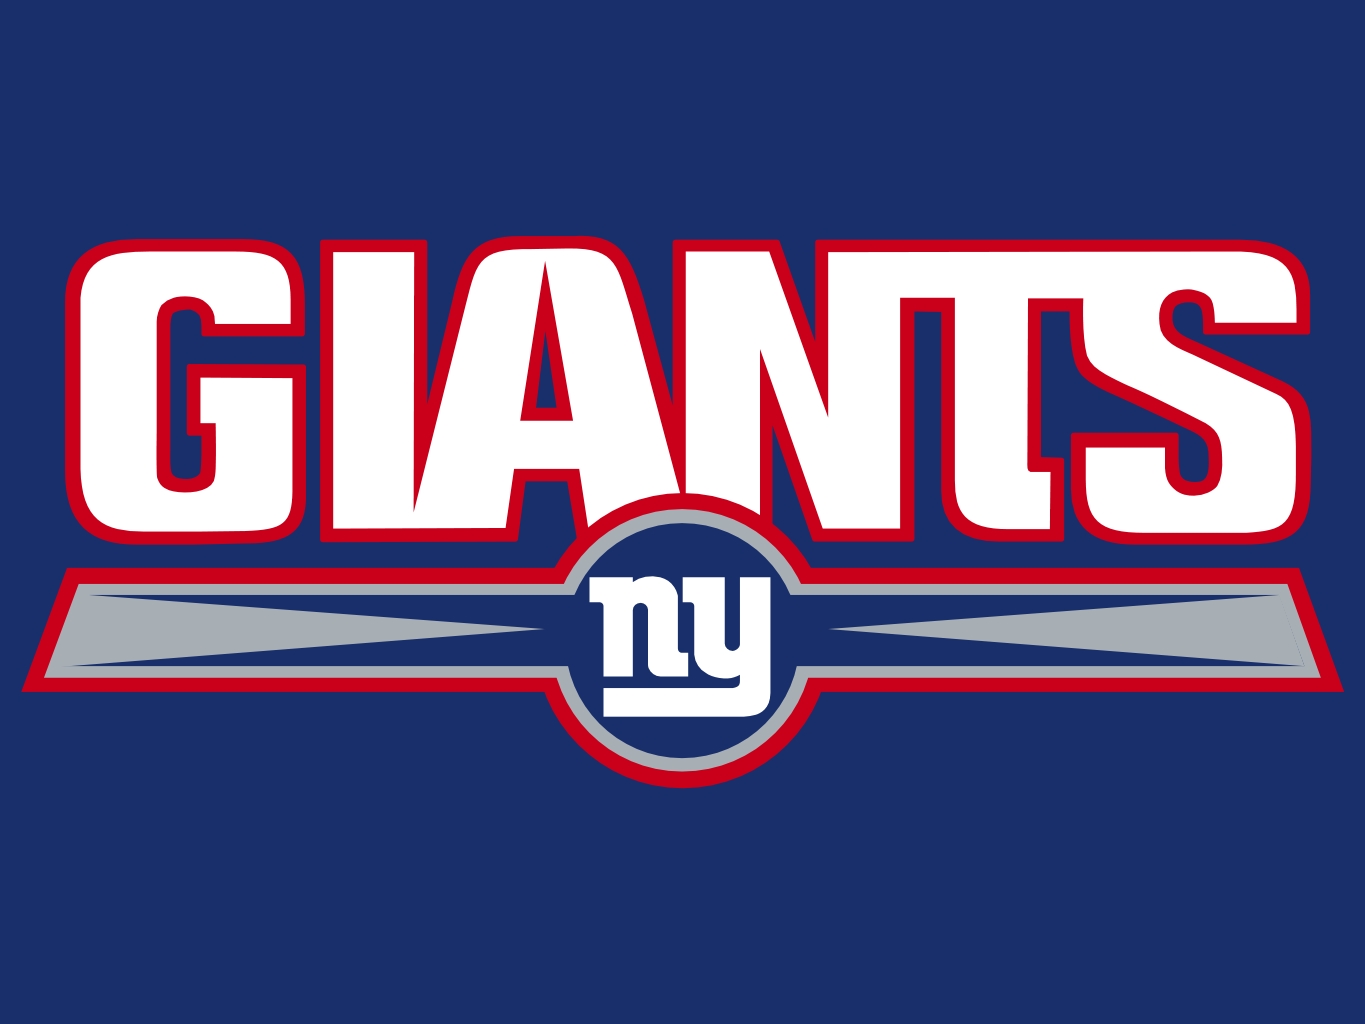 New York Giants HD wallpapers, Desktop wallpaper - most viewed